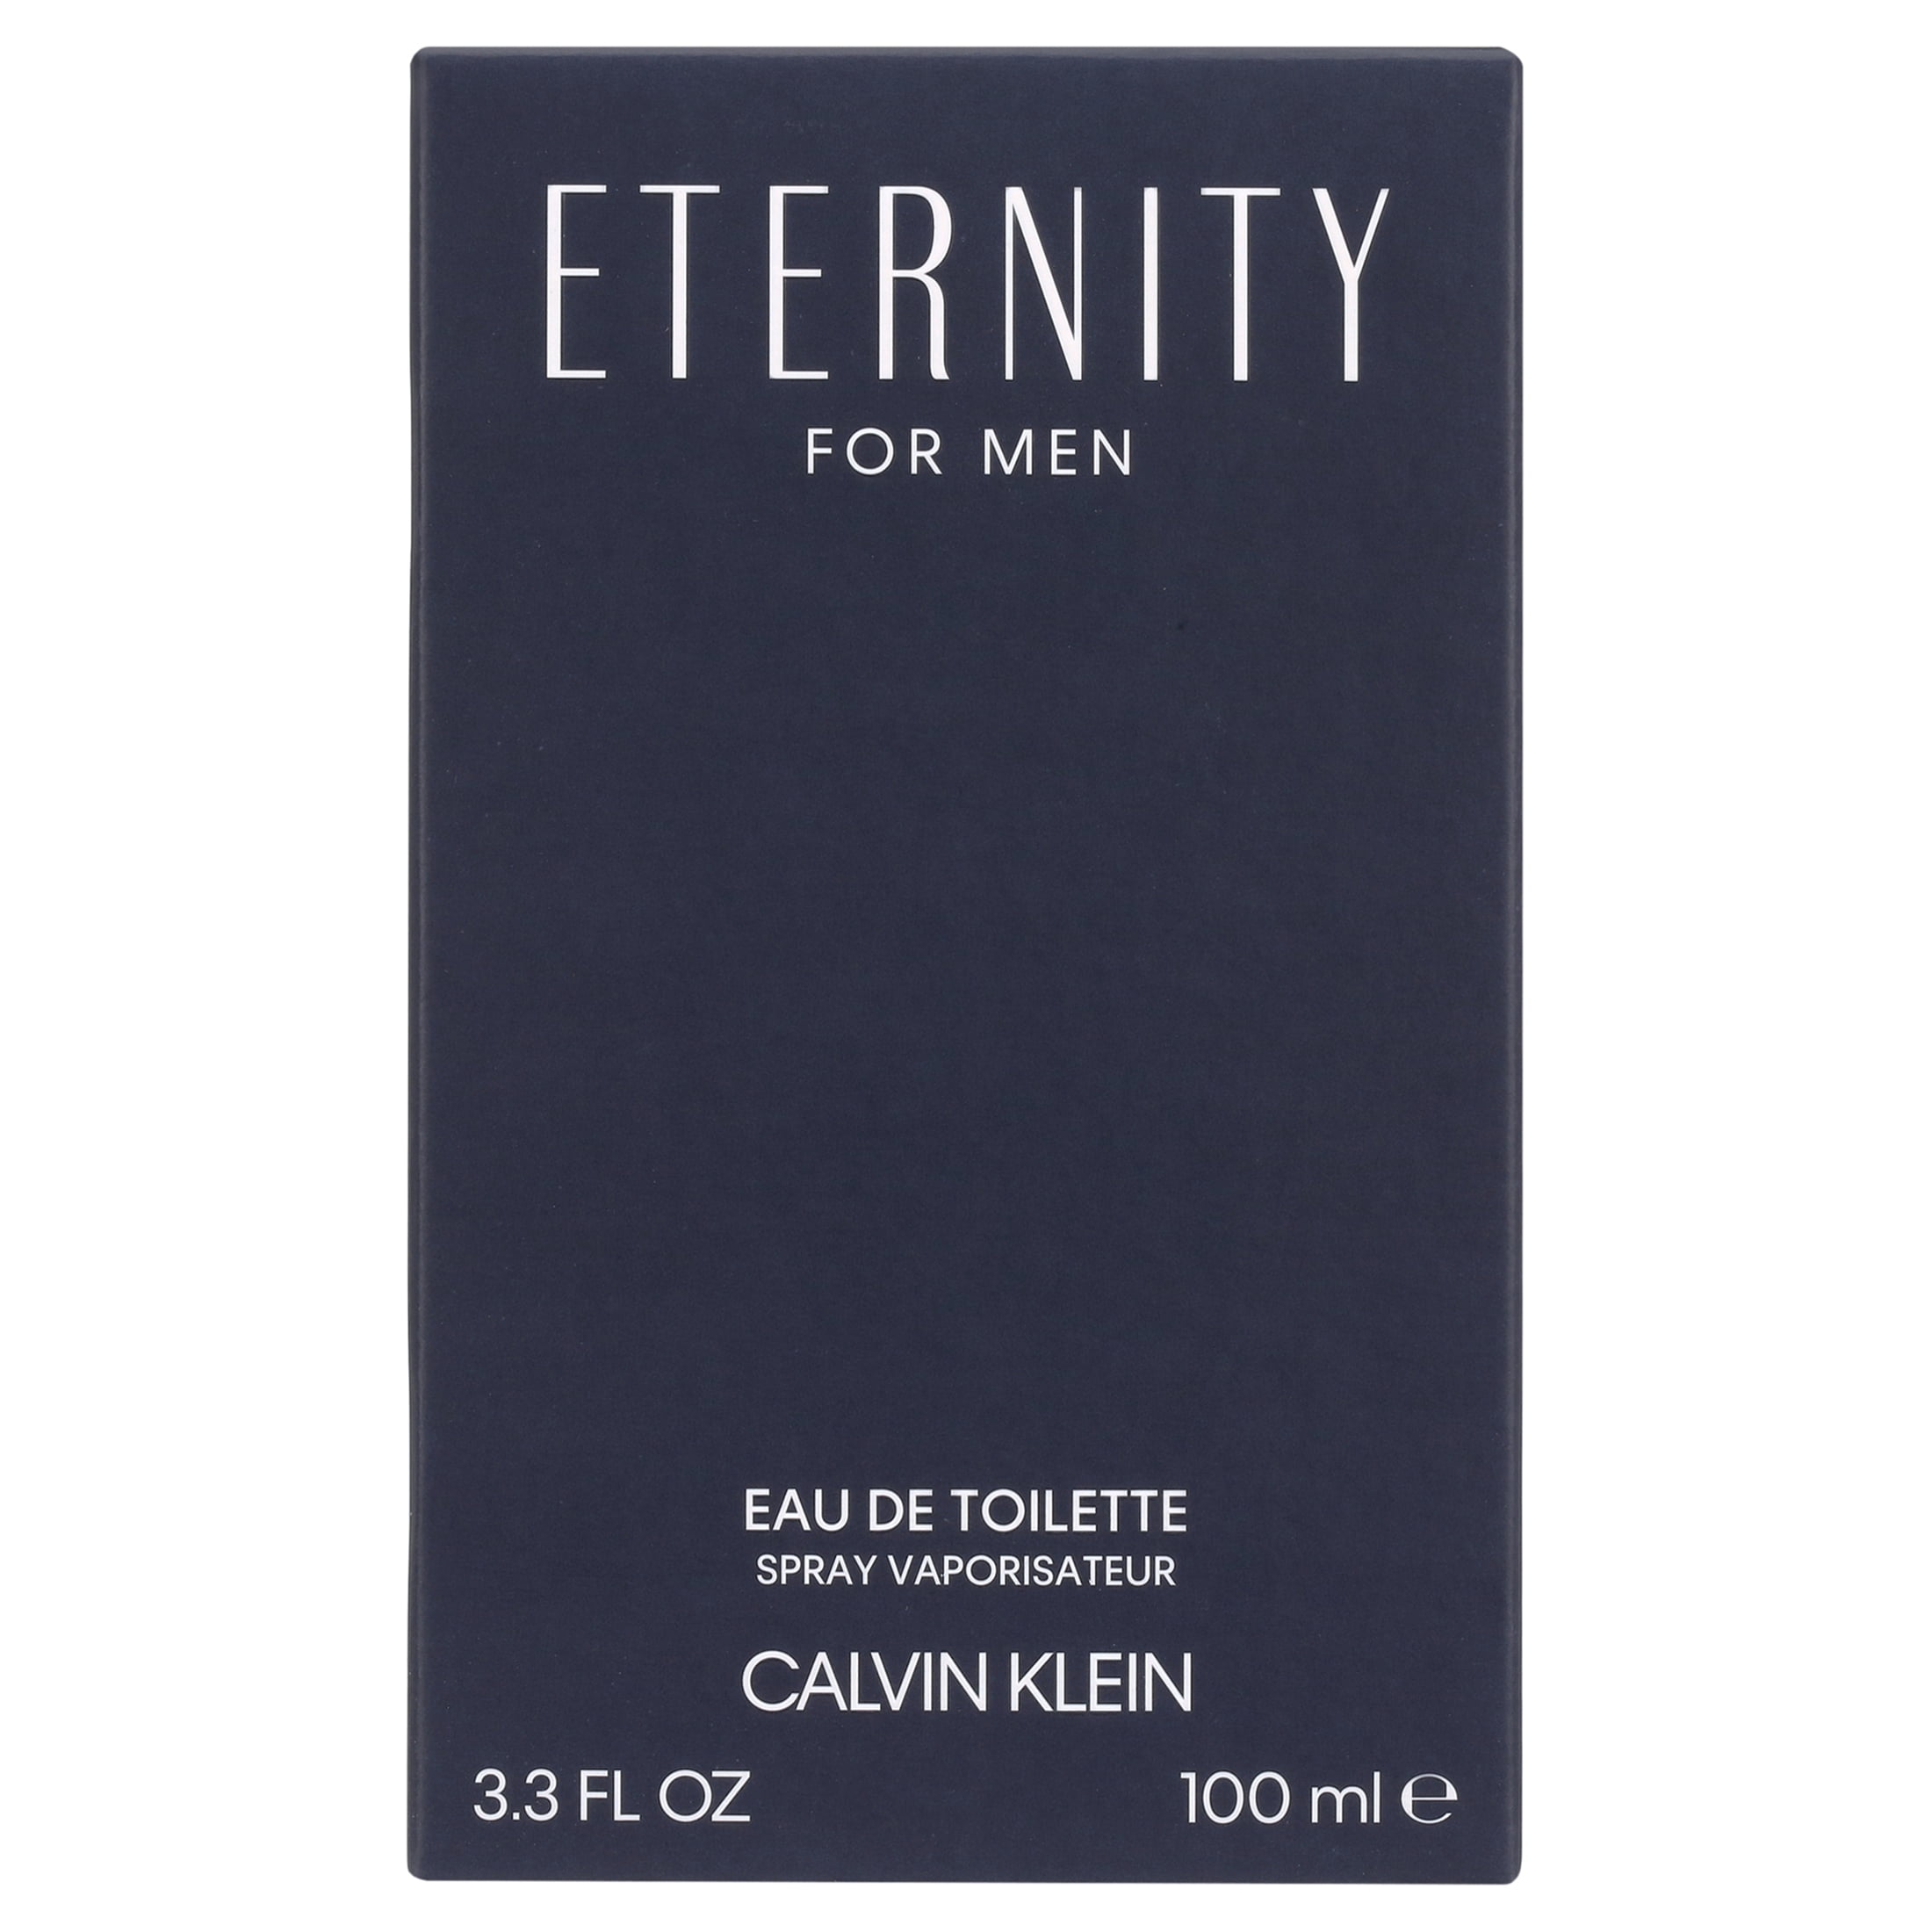 Calvin Klein Eternity Eau de Toilette Spray 1.7 oz for Men